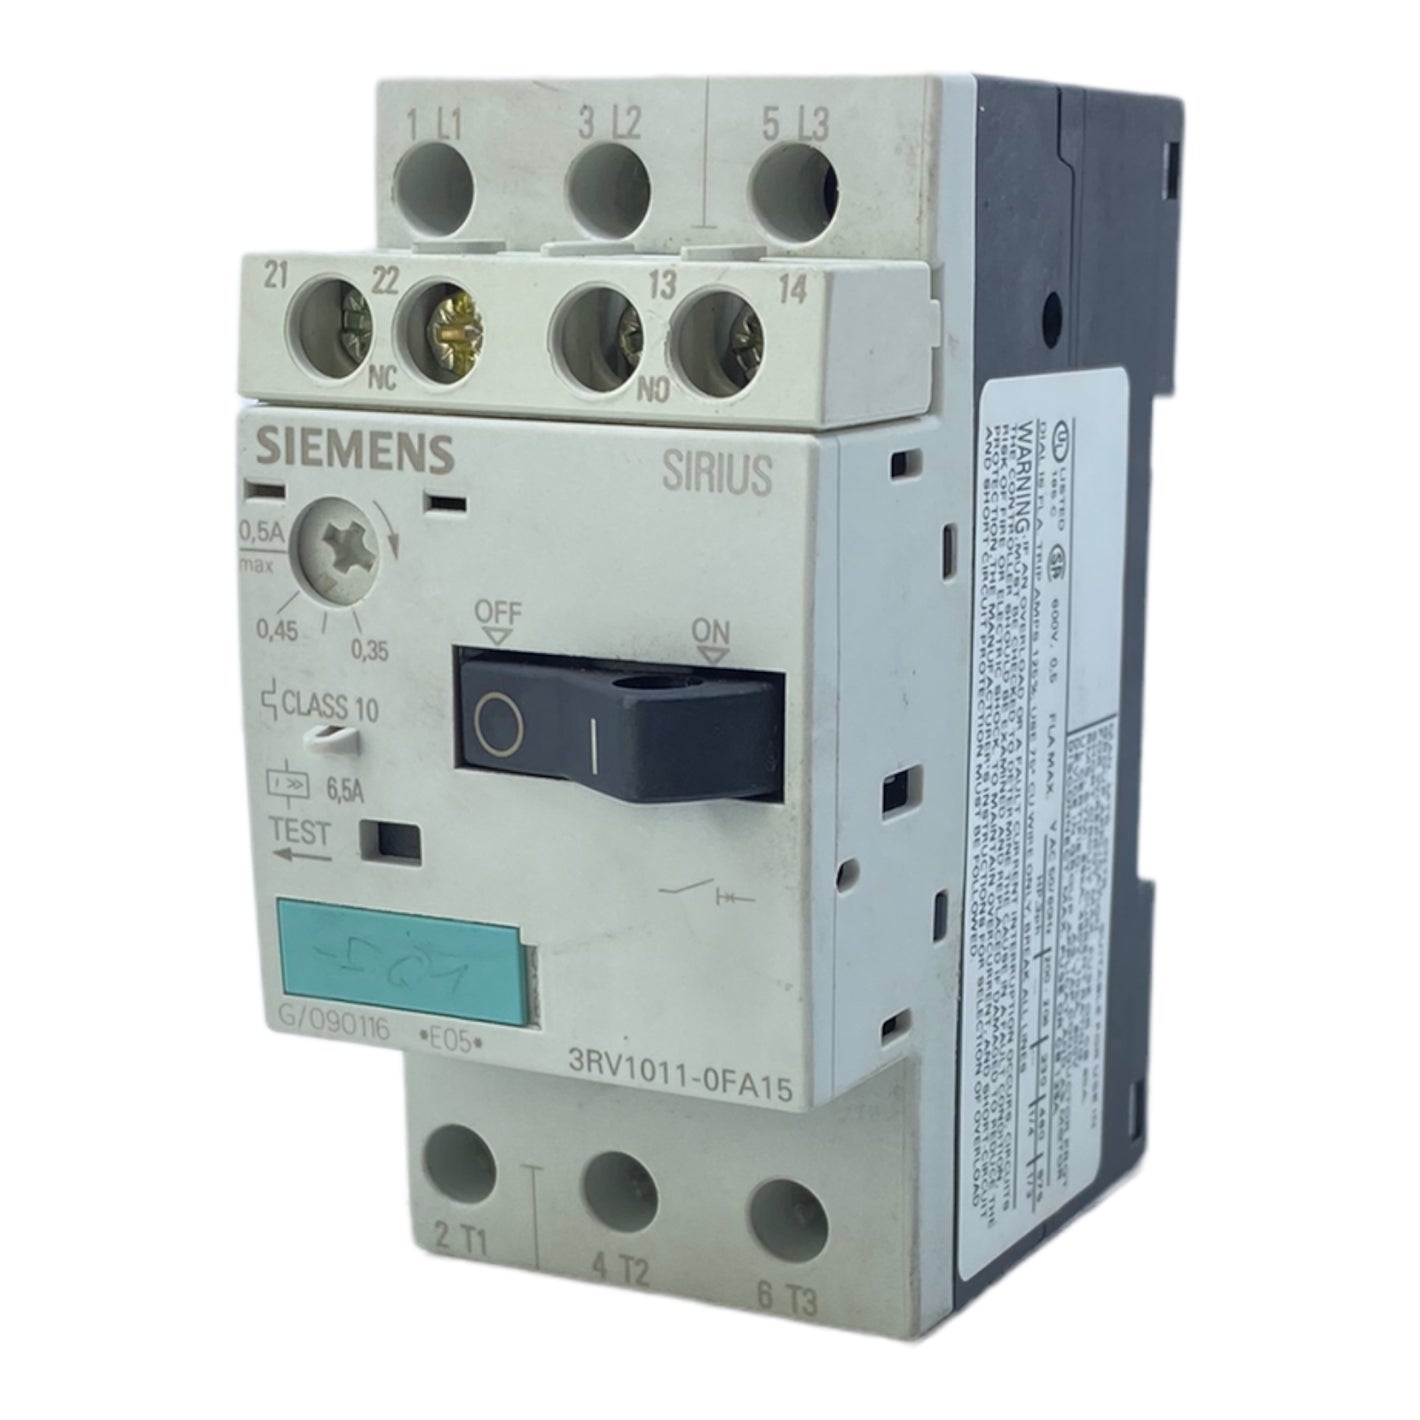 Siemens 3RV1011-0FA15 motor protection switch 0.35 → 0.5 A SIRIUS 